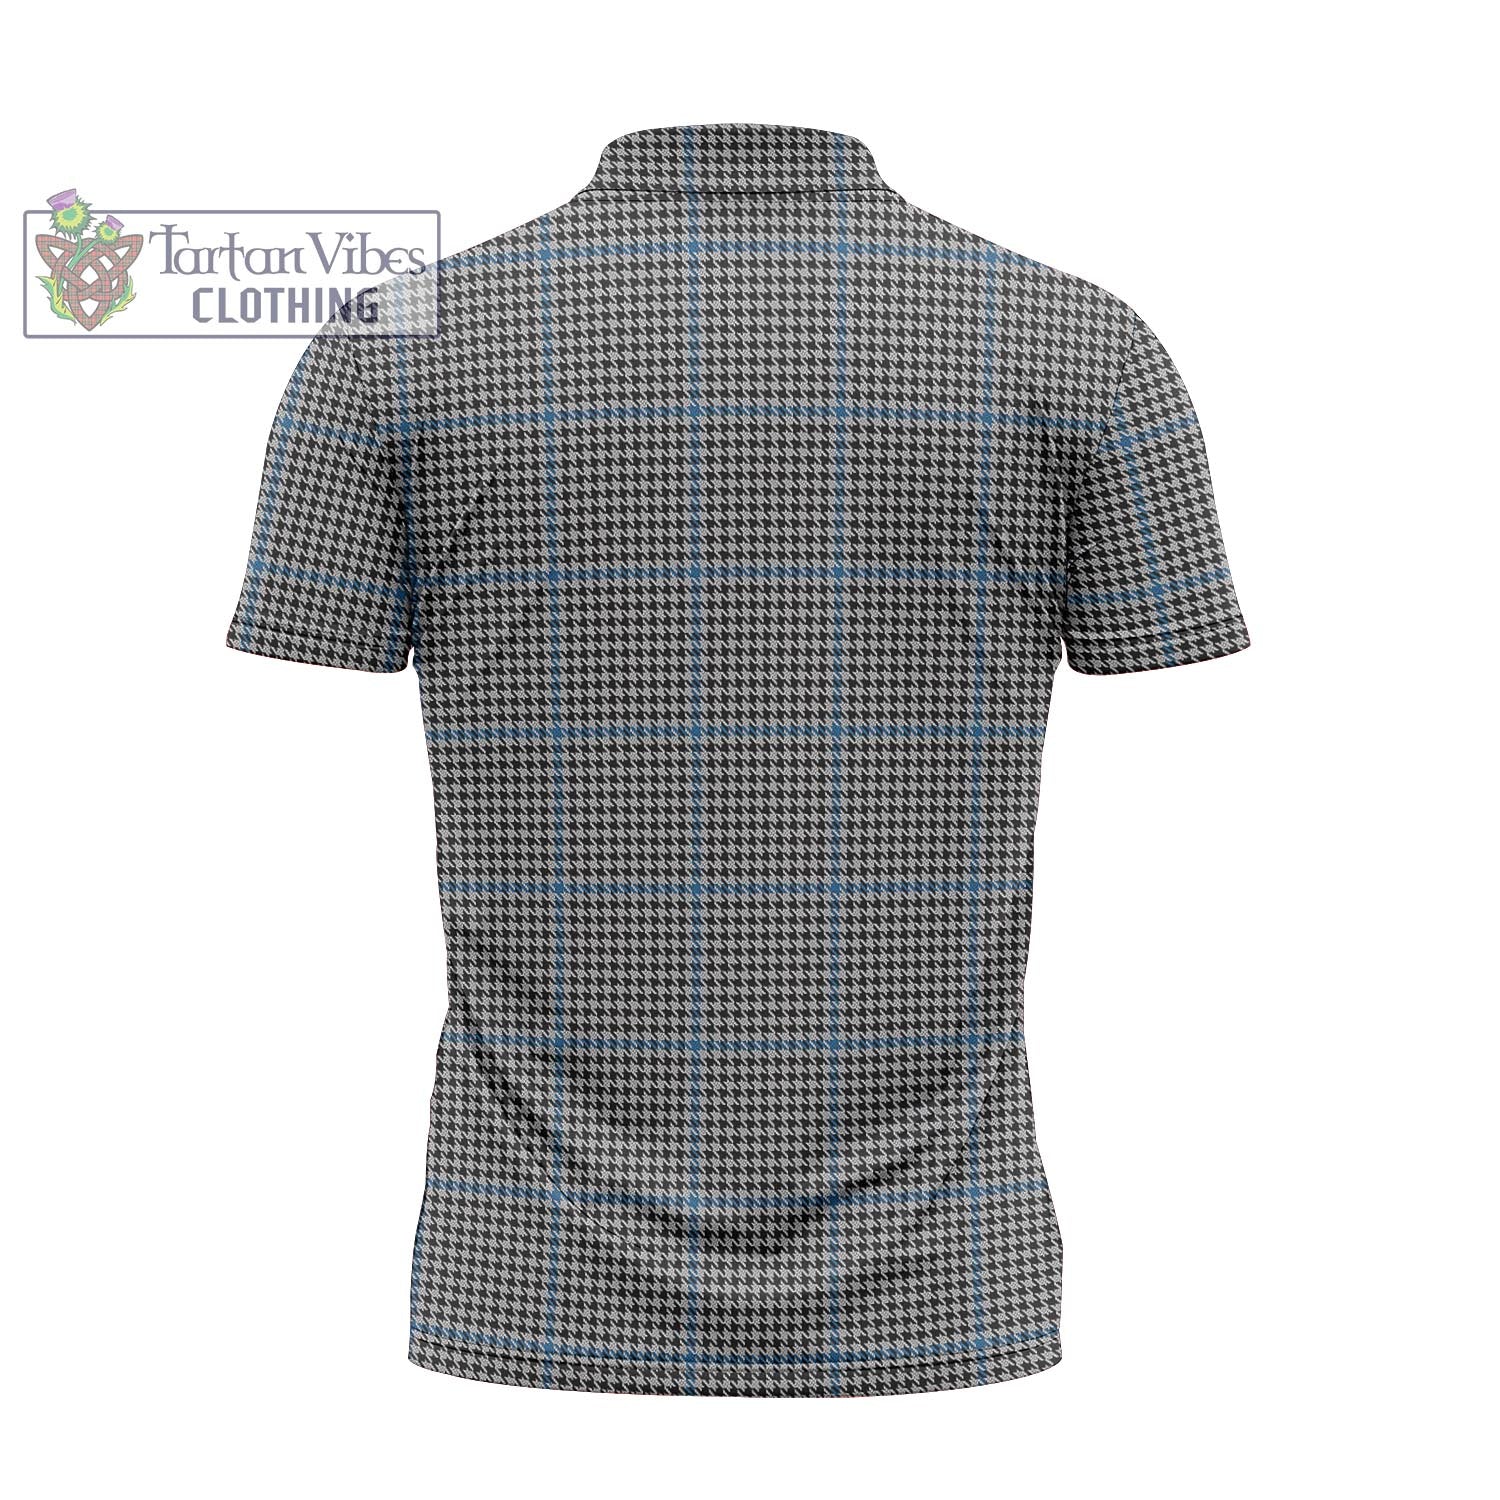 Tartan Vibes Clothing Gladstone Tartan Zipper Polo Shirt with Family Crest